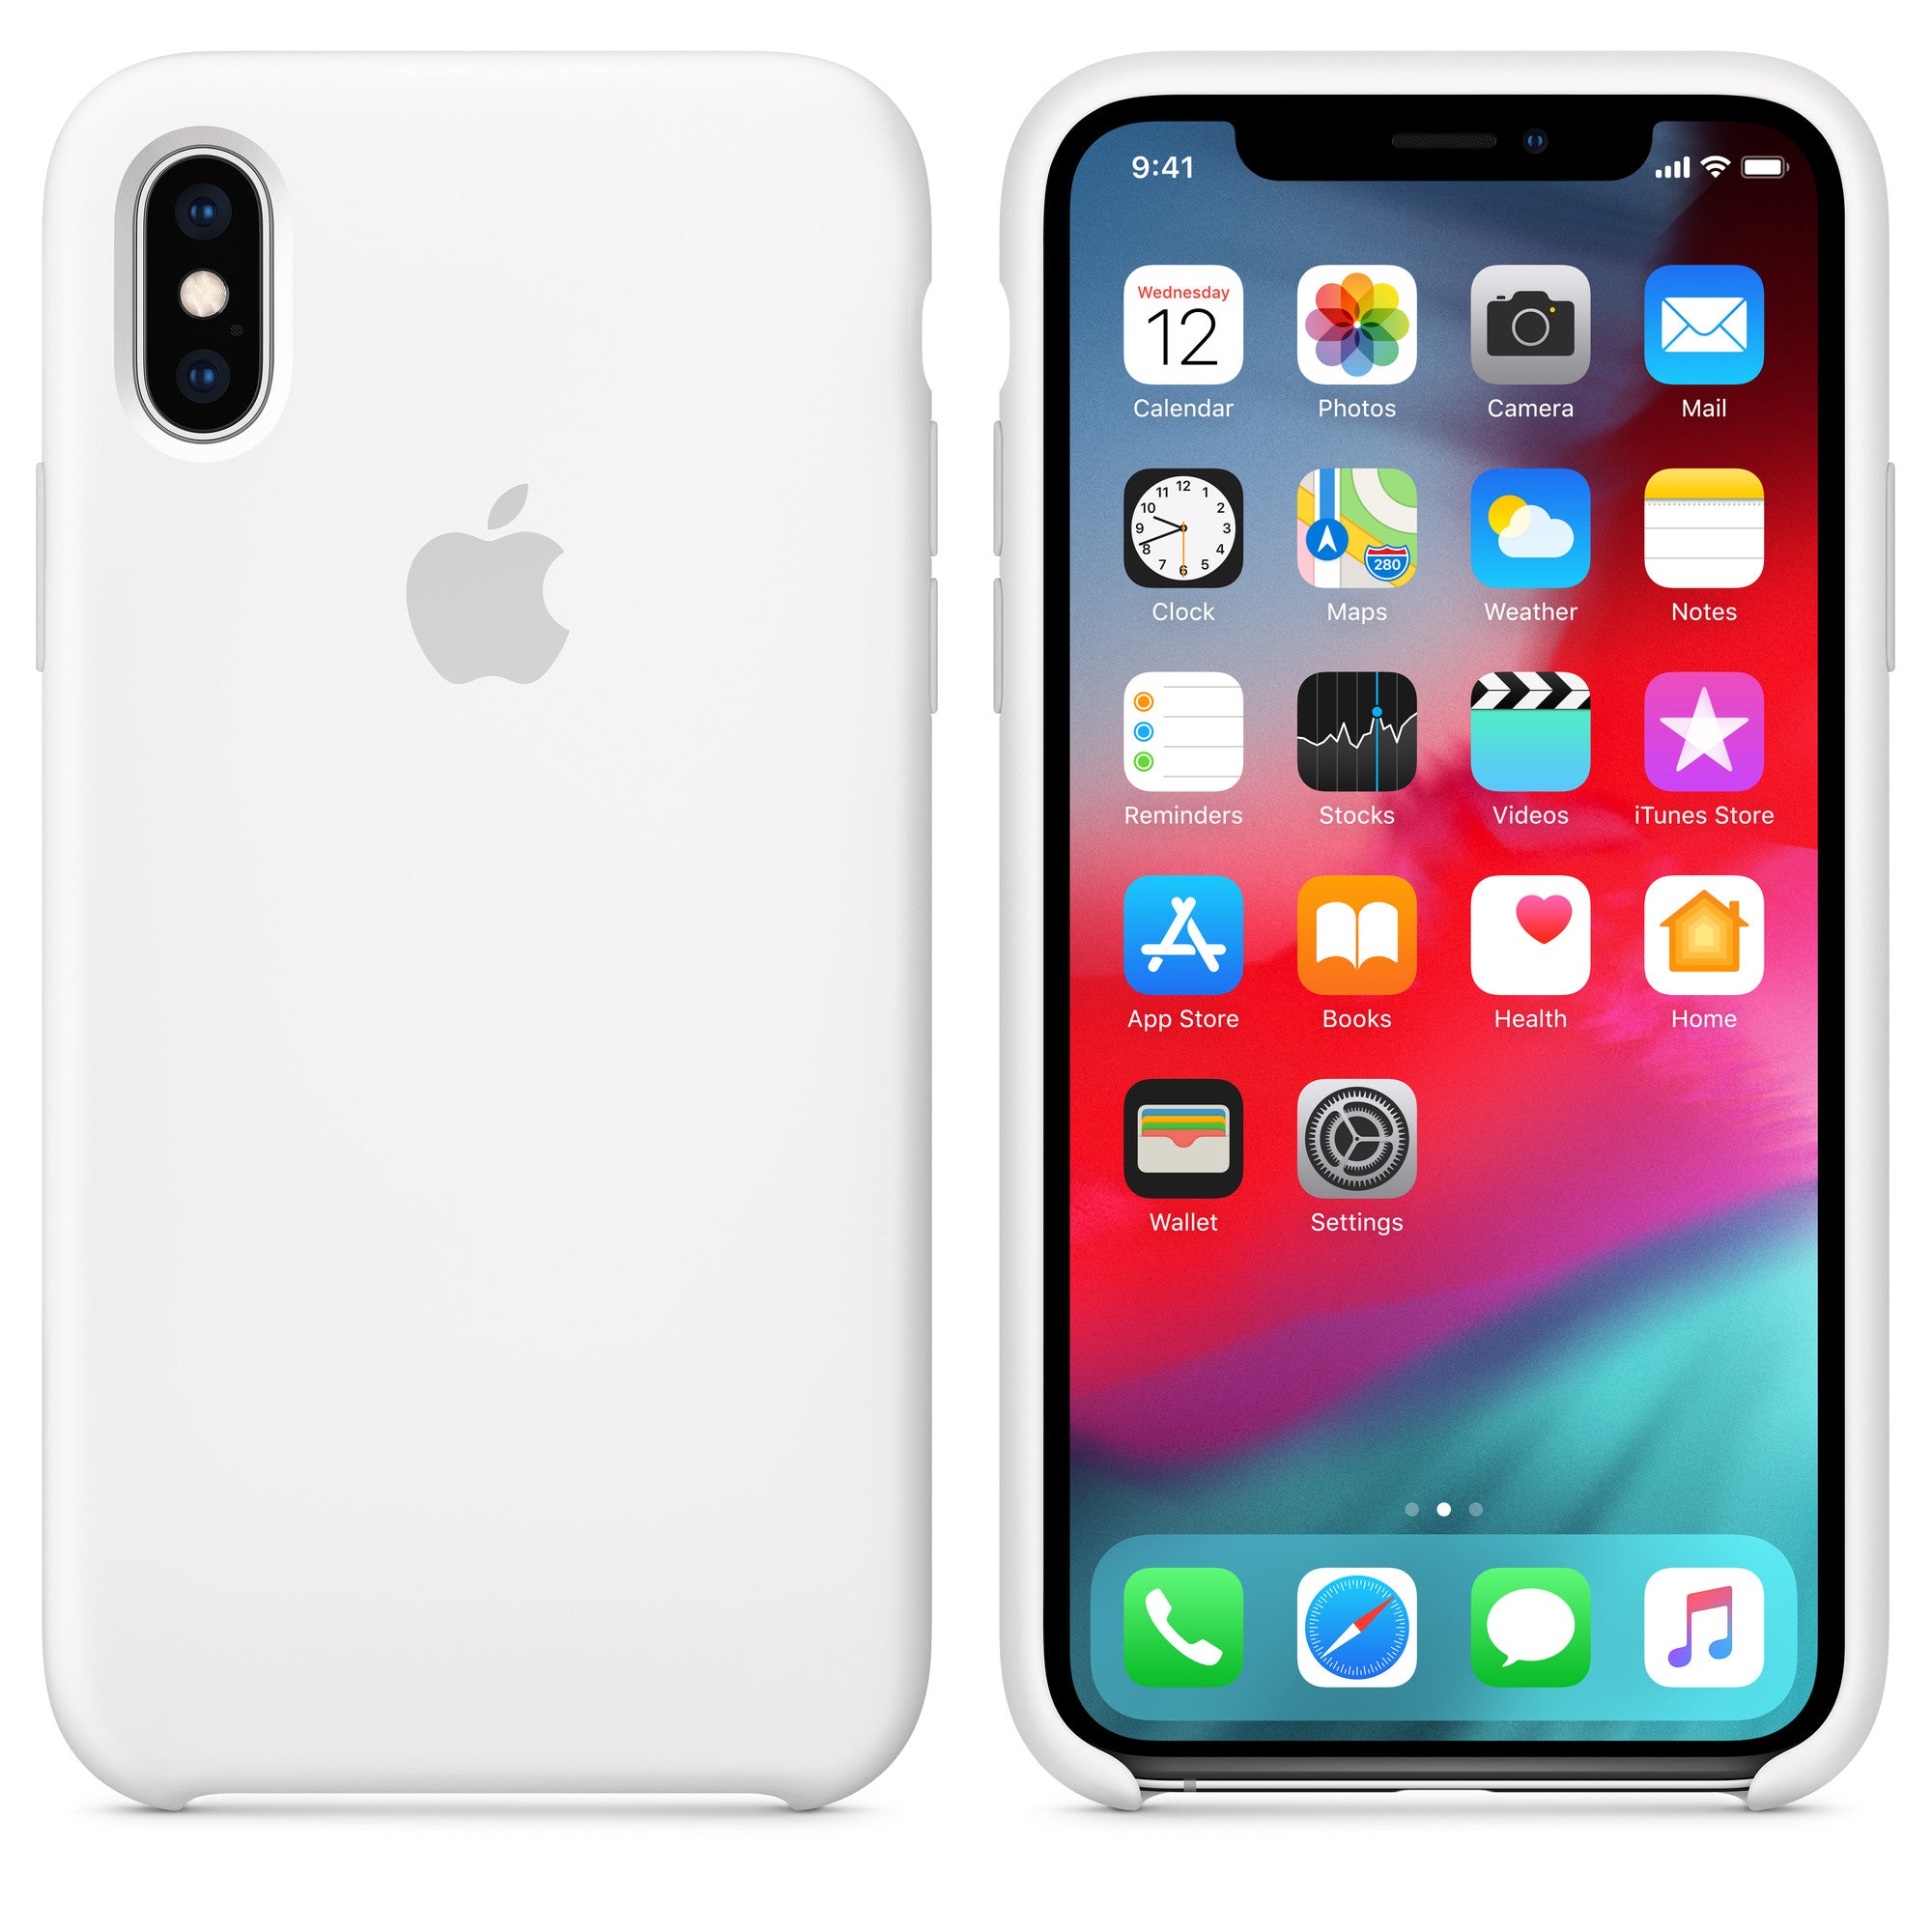 Apple iPhone XS Silicone Case - White White New - Sealed